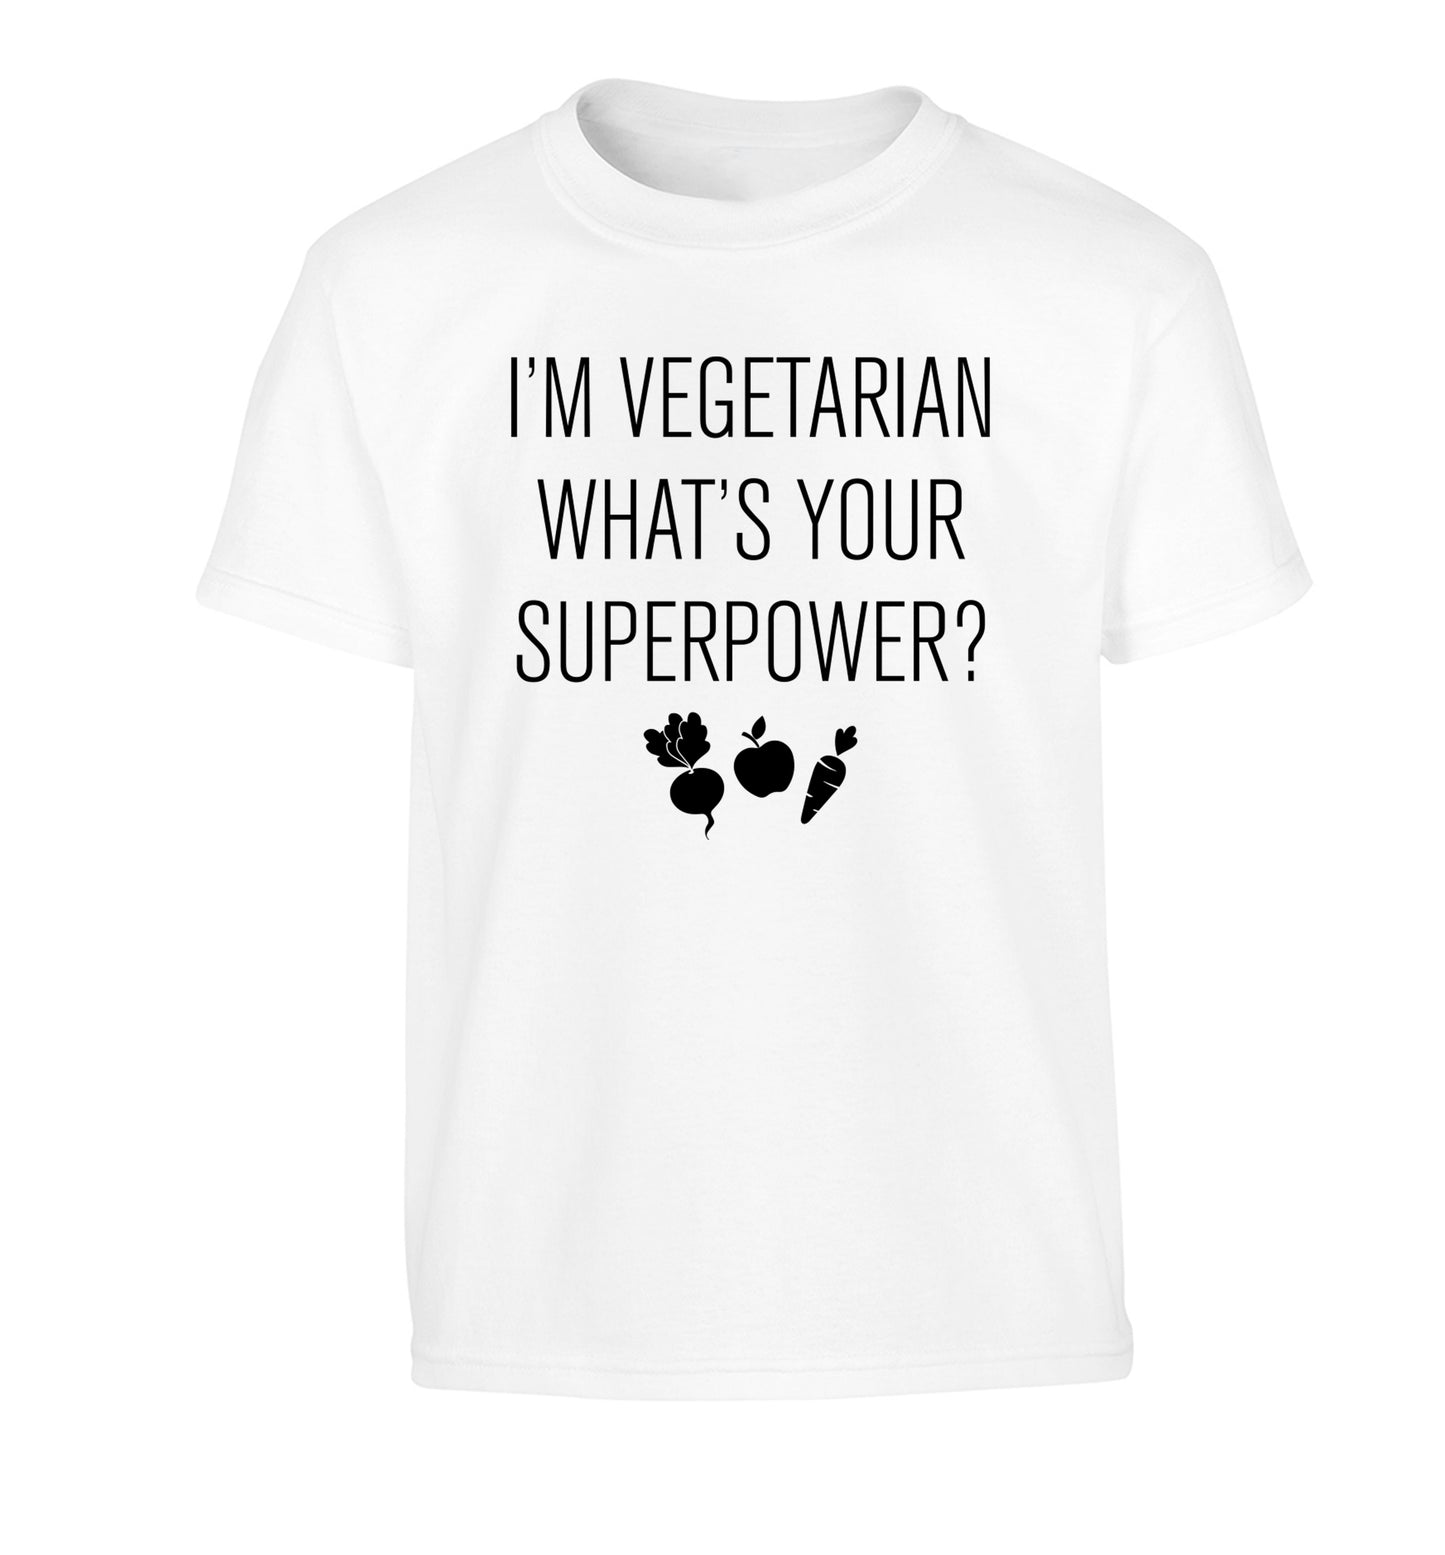 I'm vegetarian what's your superpower? Children's white Tshirt 12-13 Years